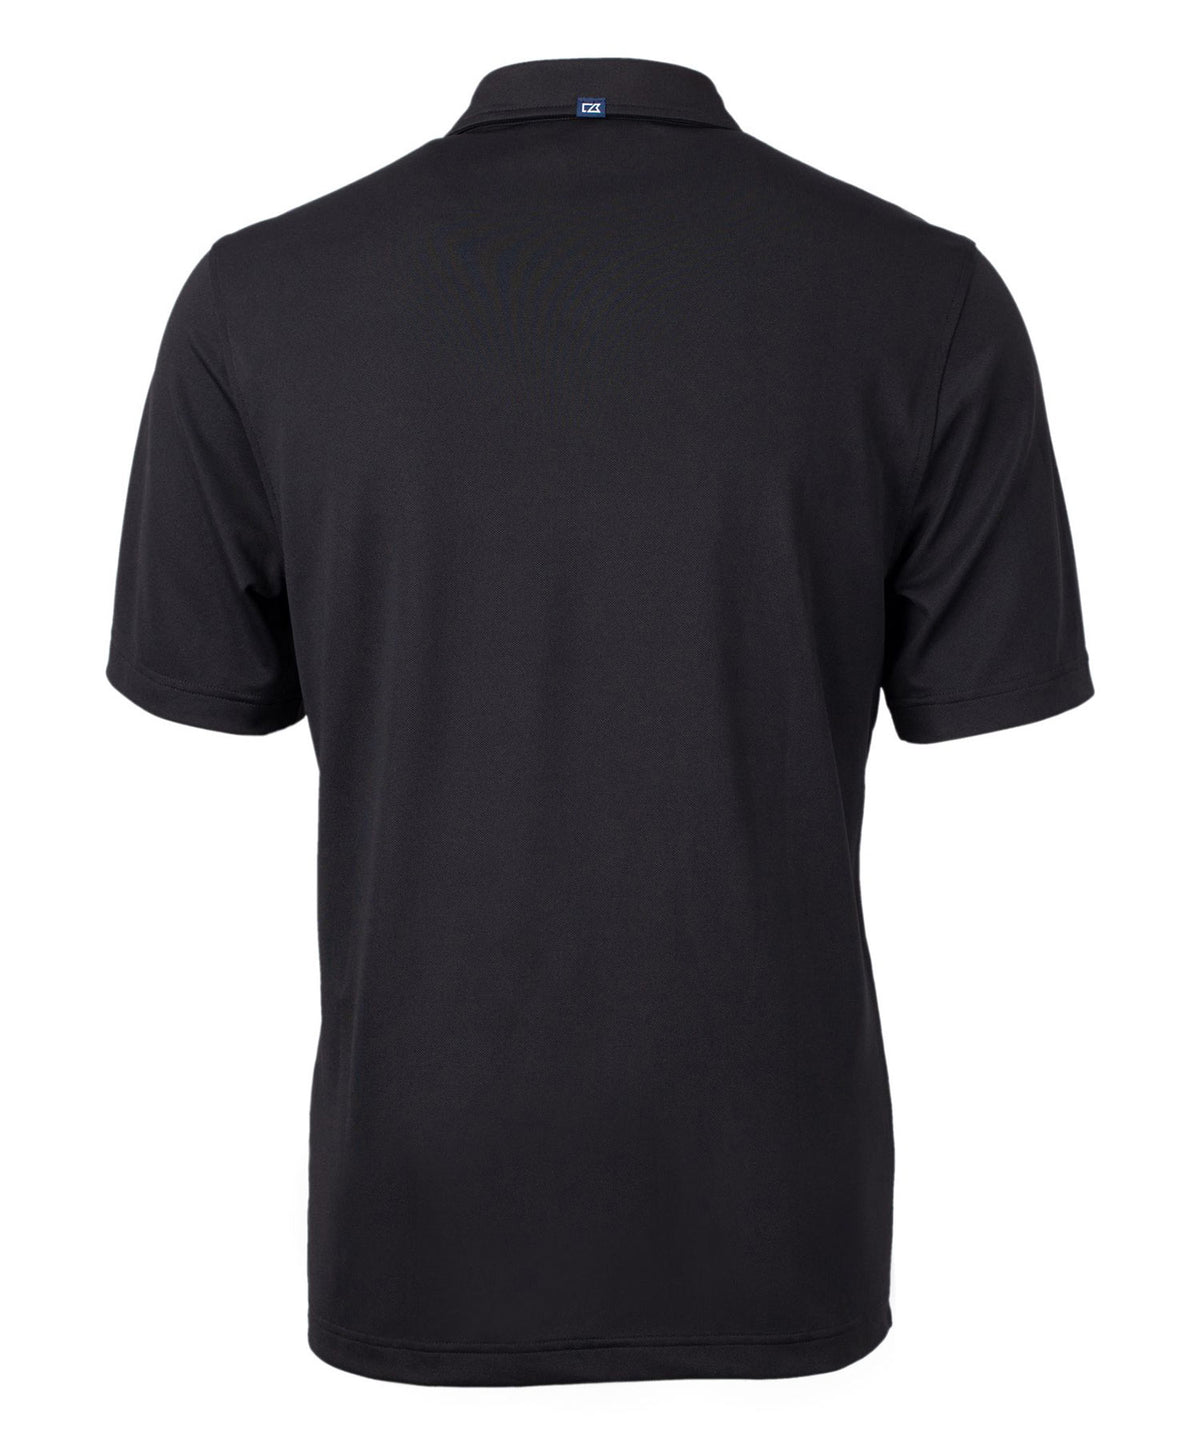 Cutter & Buck University of Georgia Bulldogs Short Sleeve Polo Knit Shirt, Men's Big & Tall